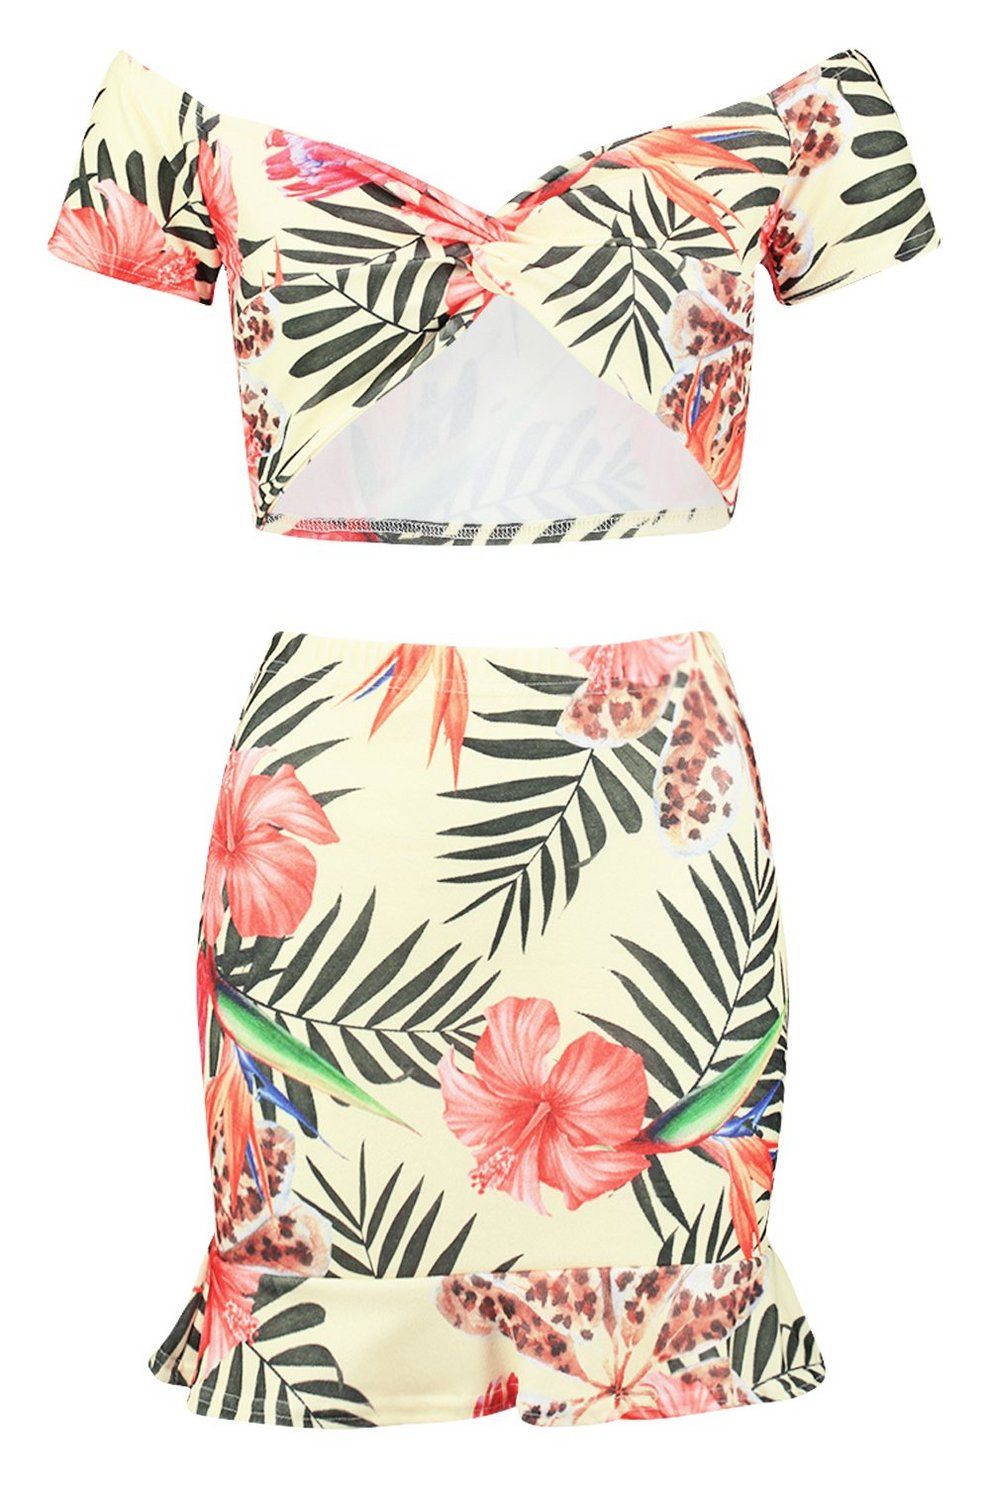 Tropical Print Twist Top & Ruffle Skirt Co-Ord | Boohoo.com (US & CA)